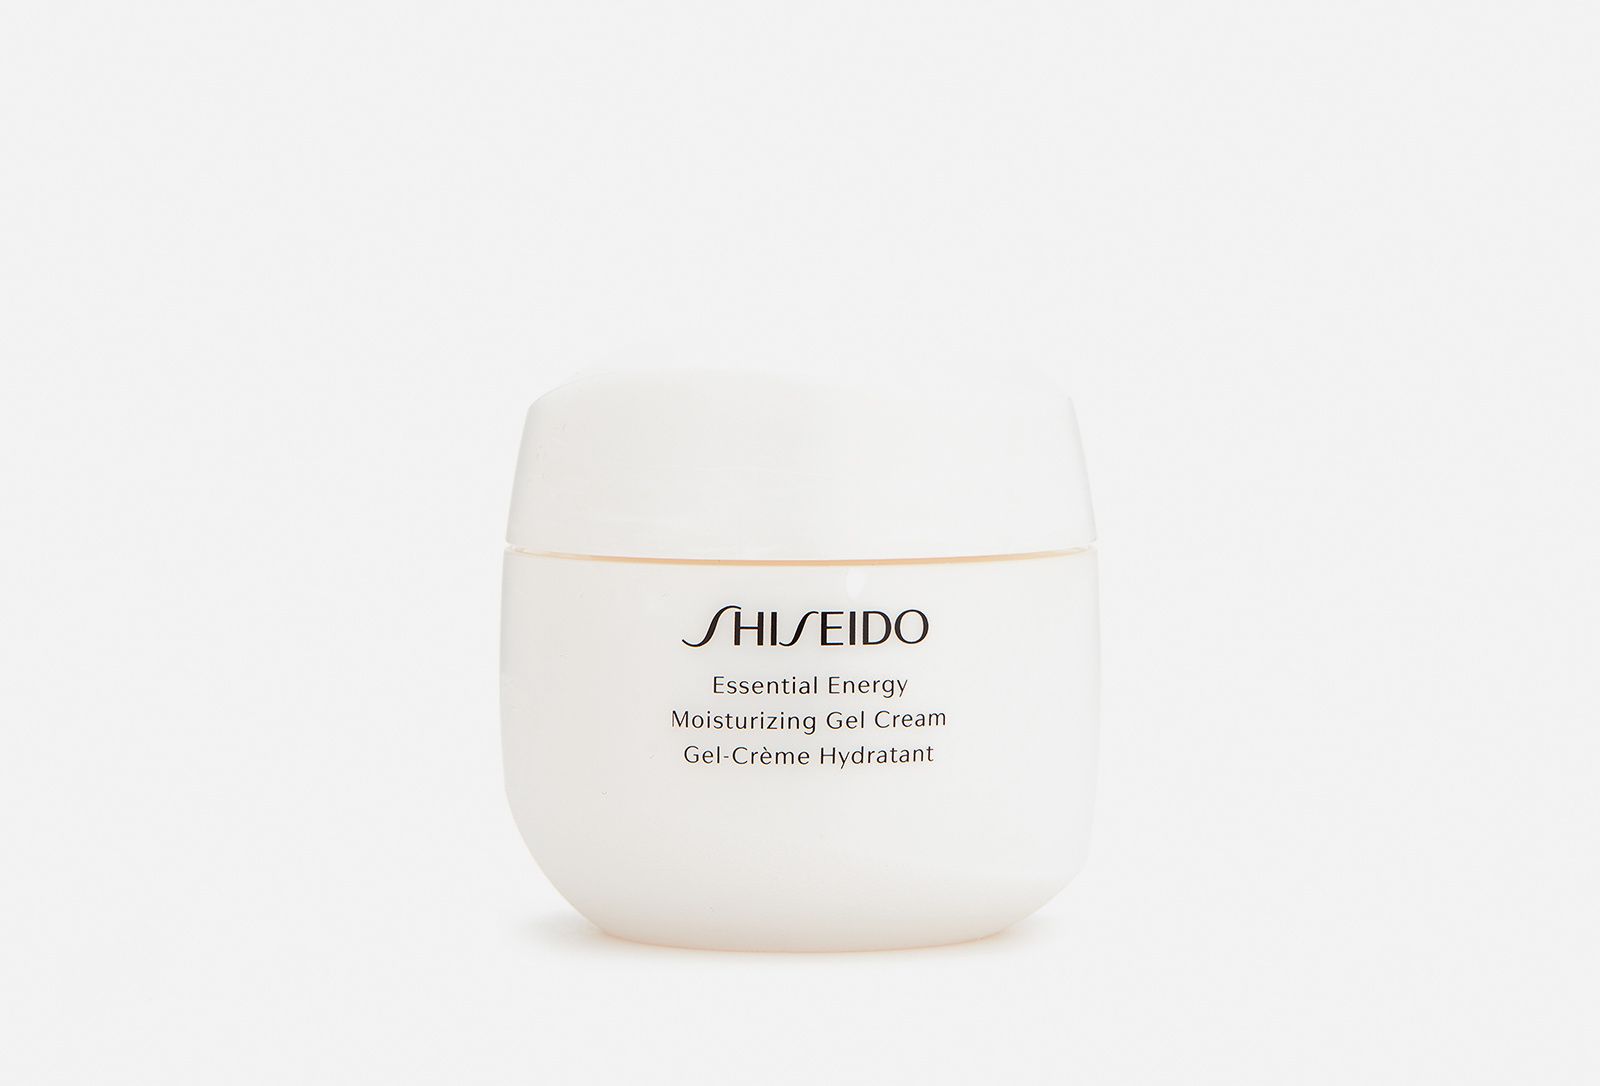 Shiseido energy. Шисейдо Essential Energy Hydrating Cream. Shiseido Essential Energy Cream. Shiseido Essential Energy Moisturizing Cream. Shiseido Essential Energy Moisturizing Gel Cream.